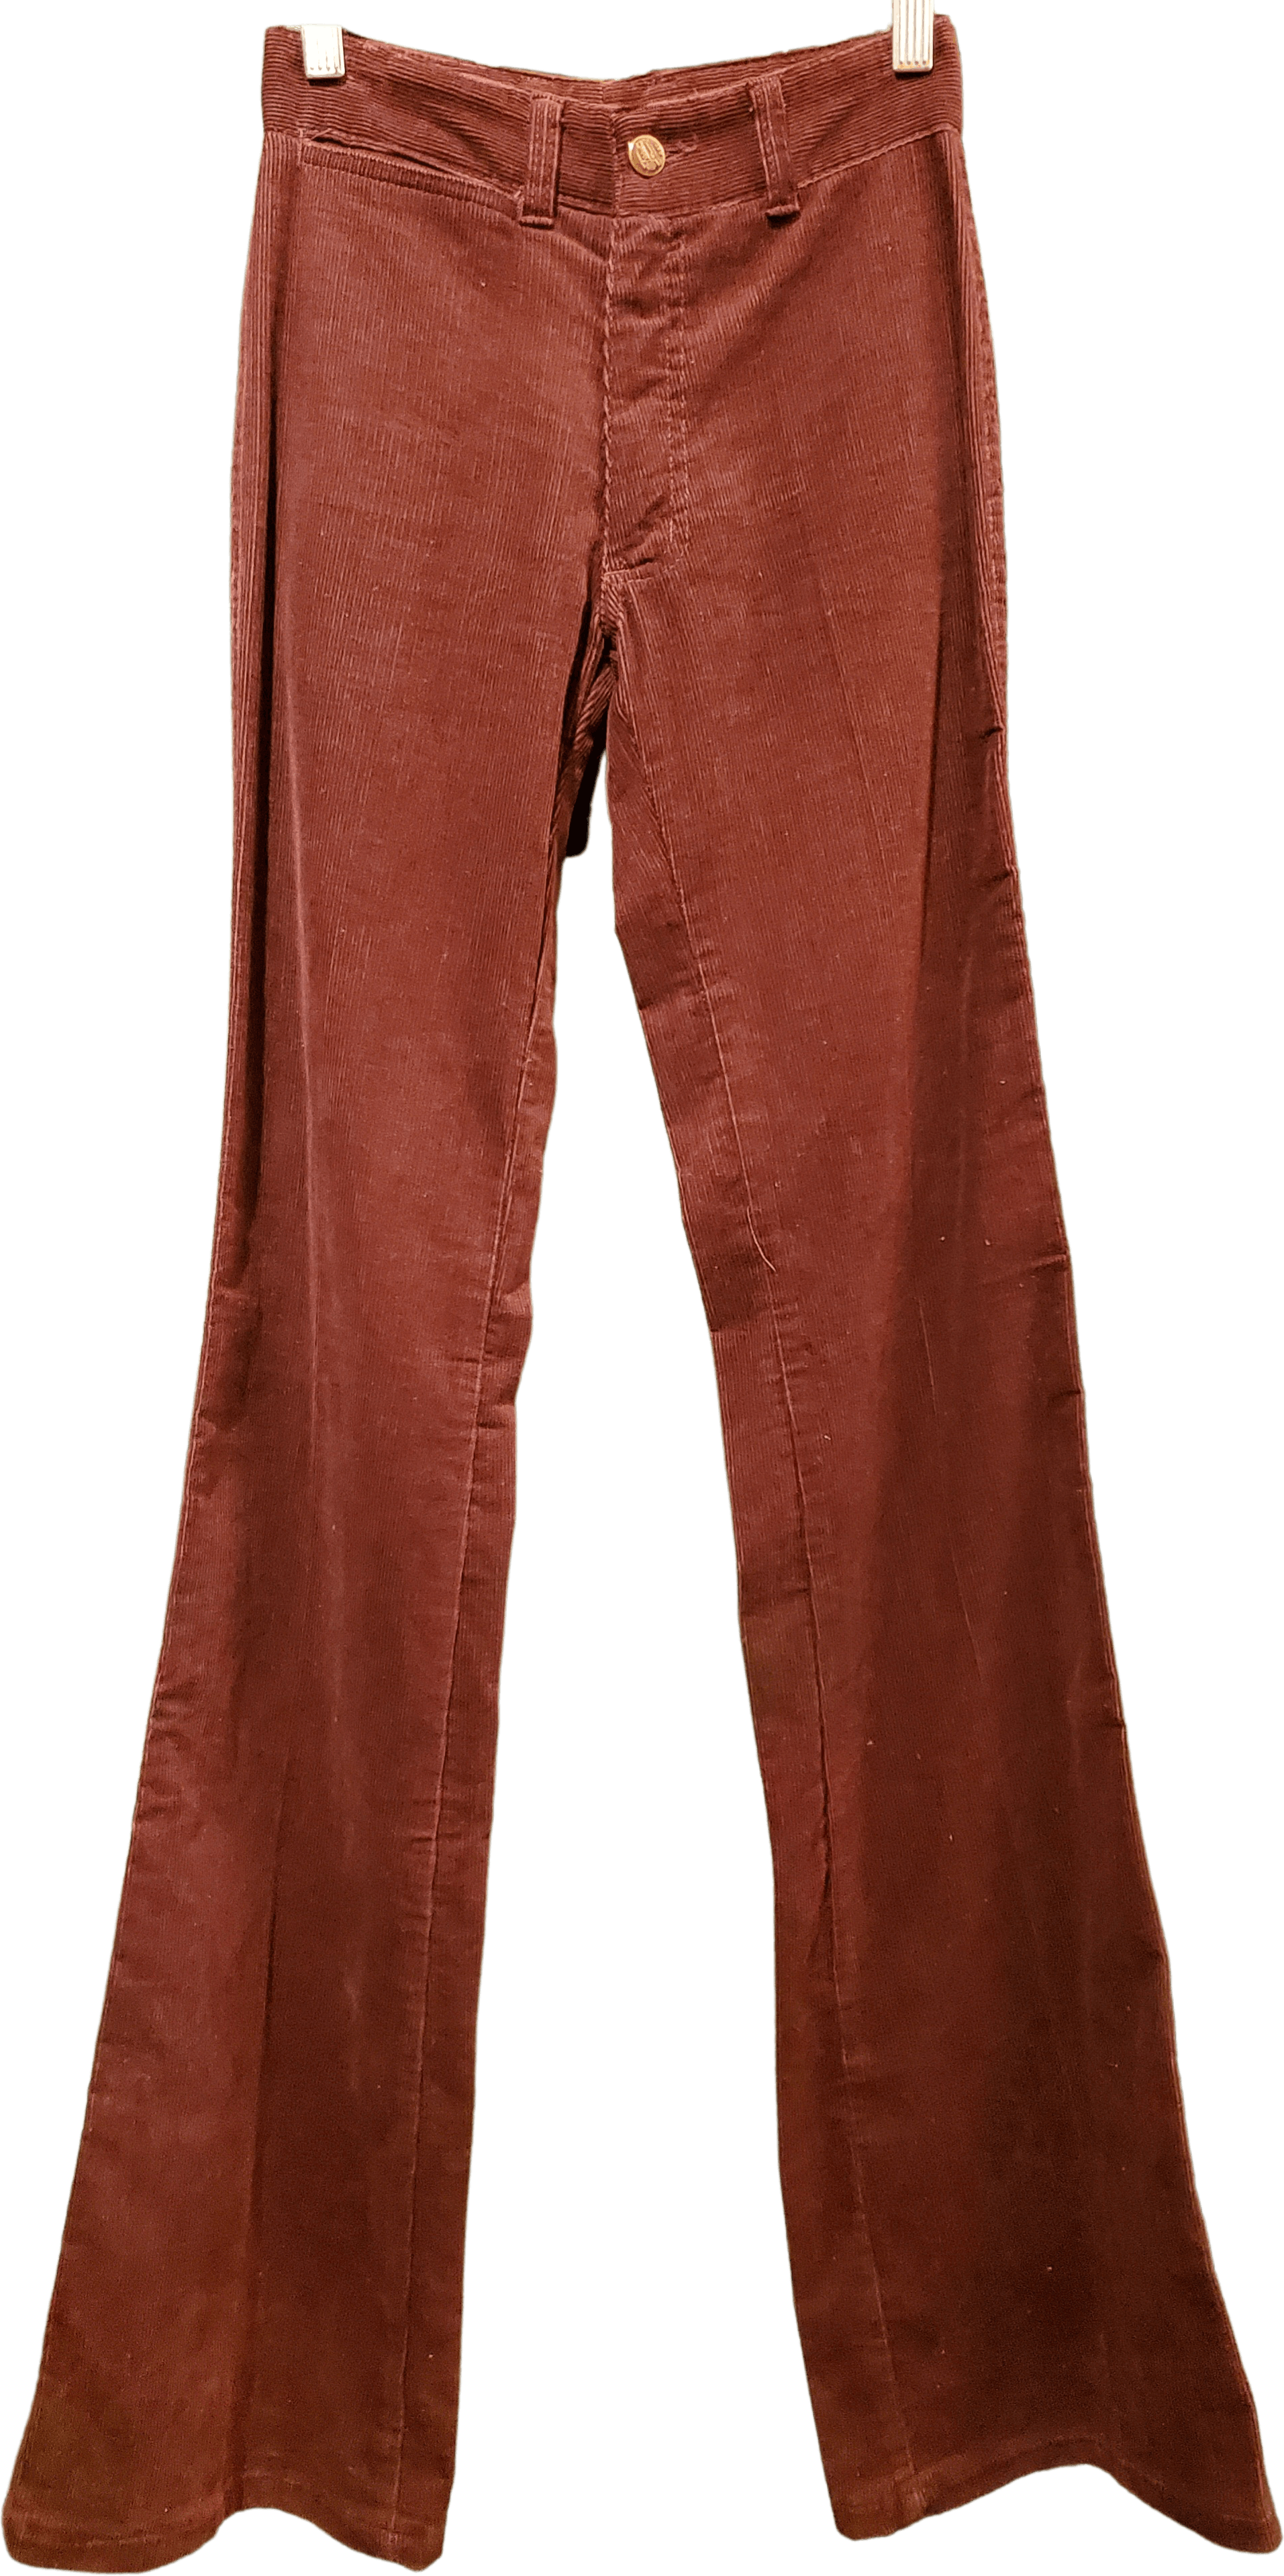 Vintage 70's/80's Brown Corduroy High Waist Flair Pants by Chemin